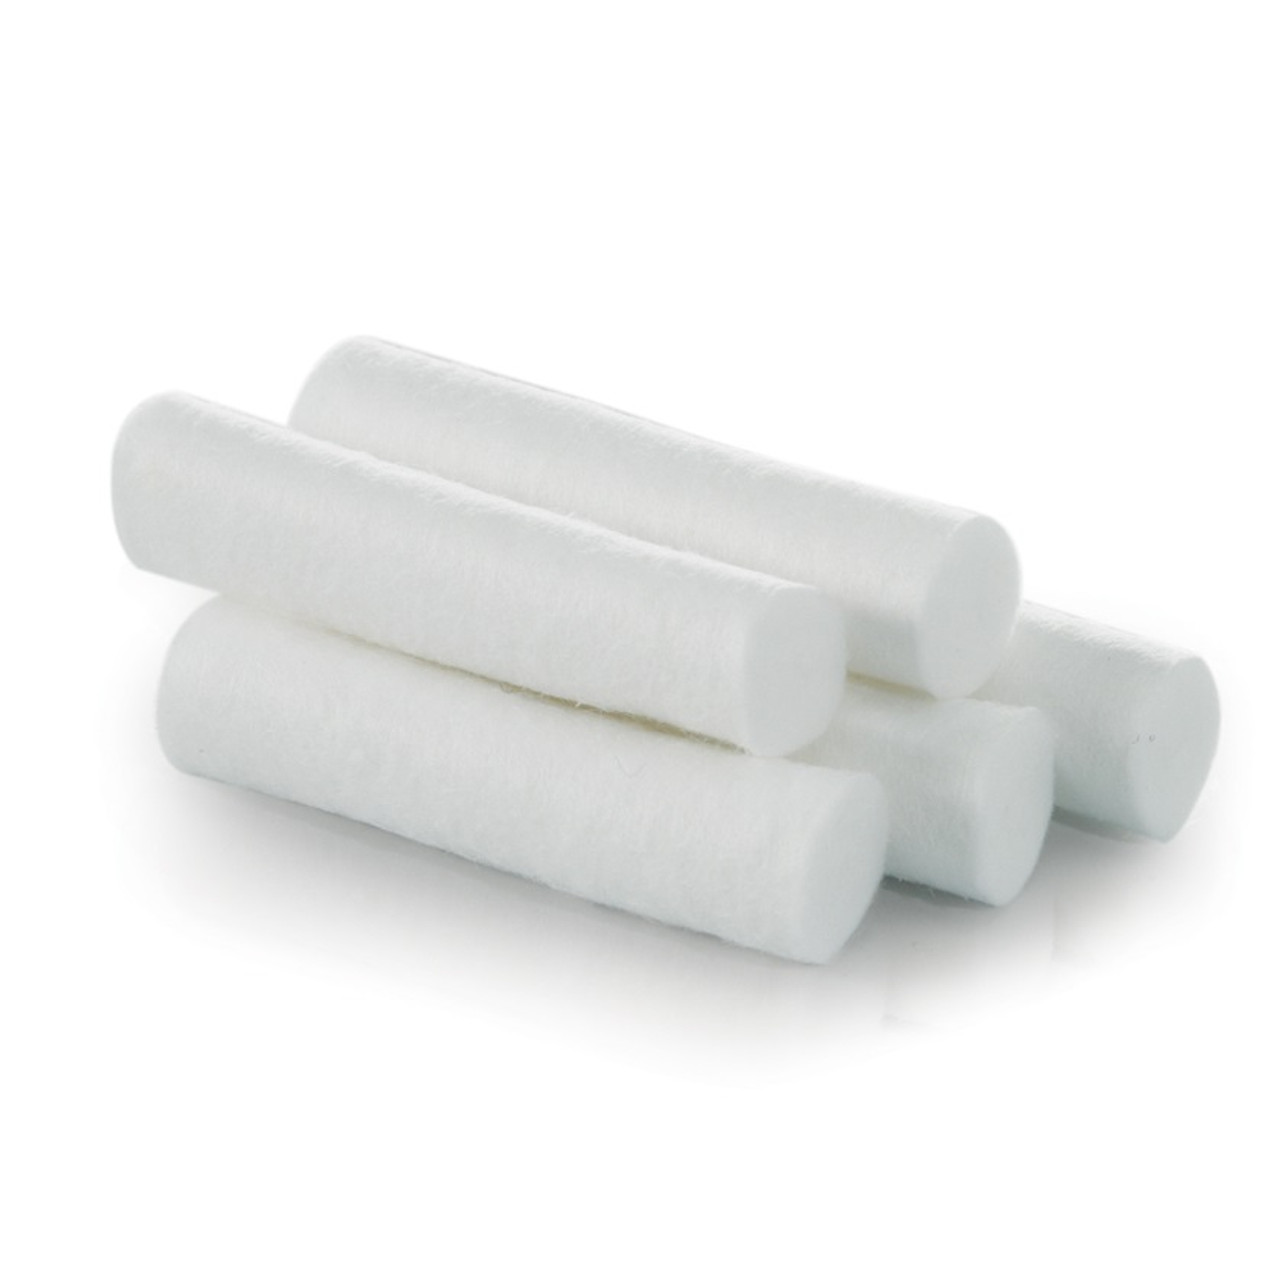 #2 Medium SafeBasics® Cotton Roll - 2,000/Box (3554)